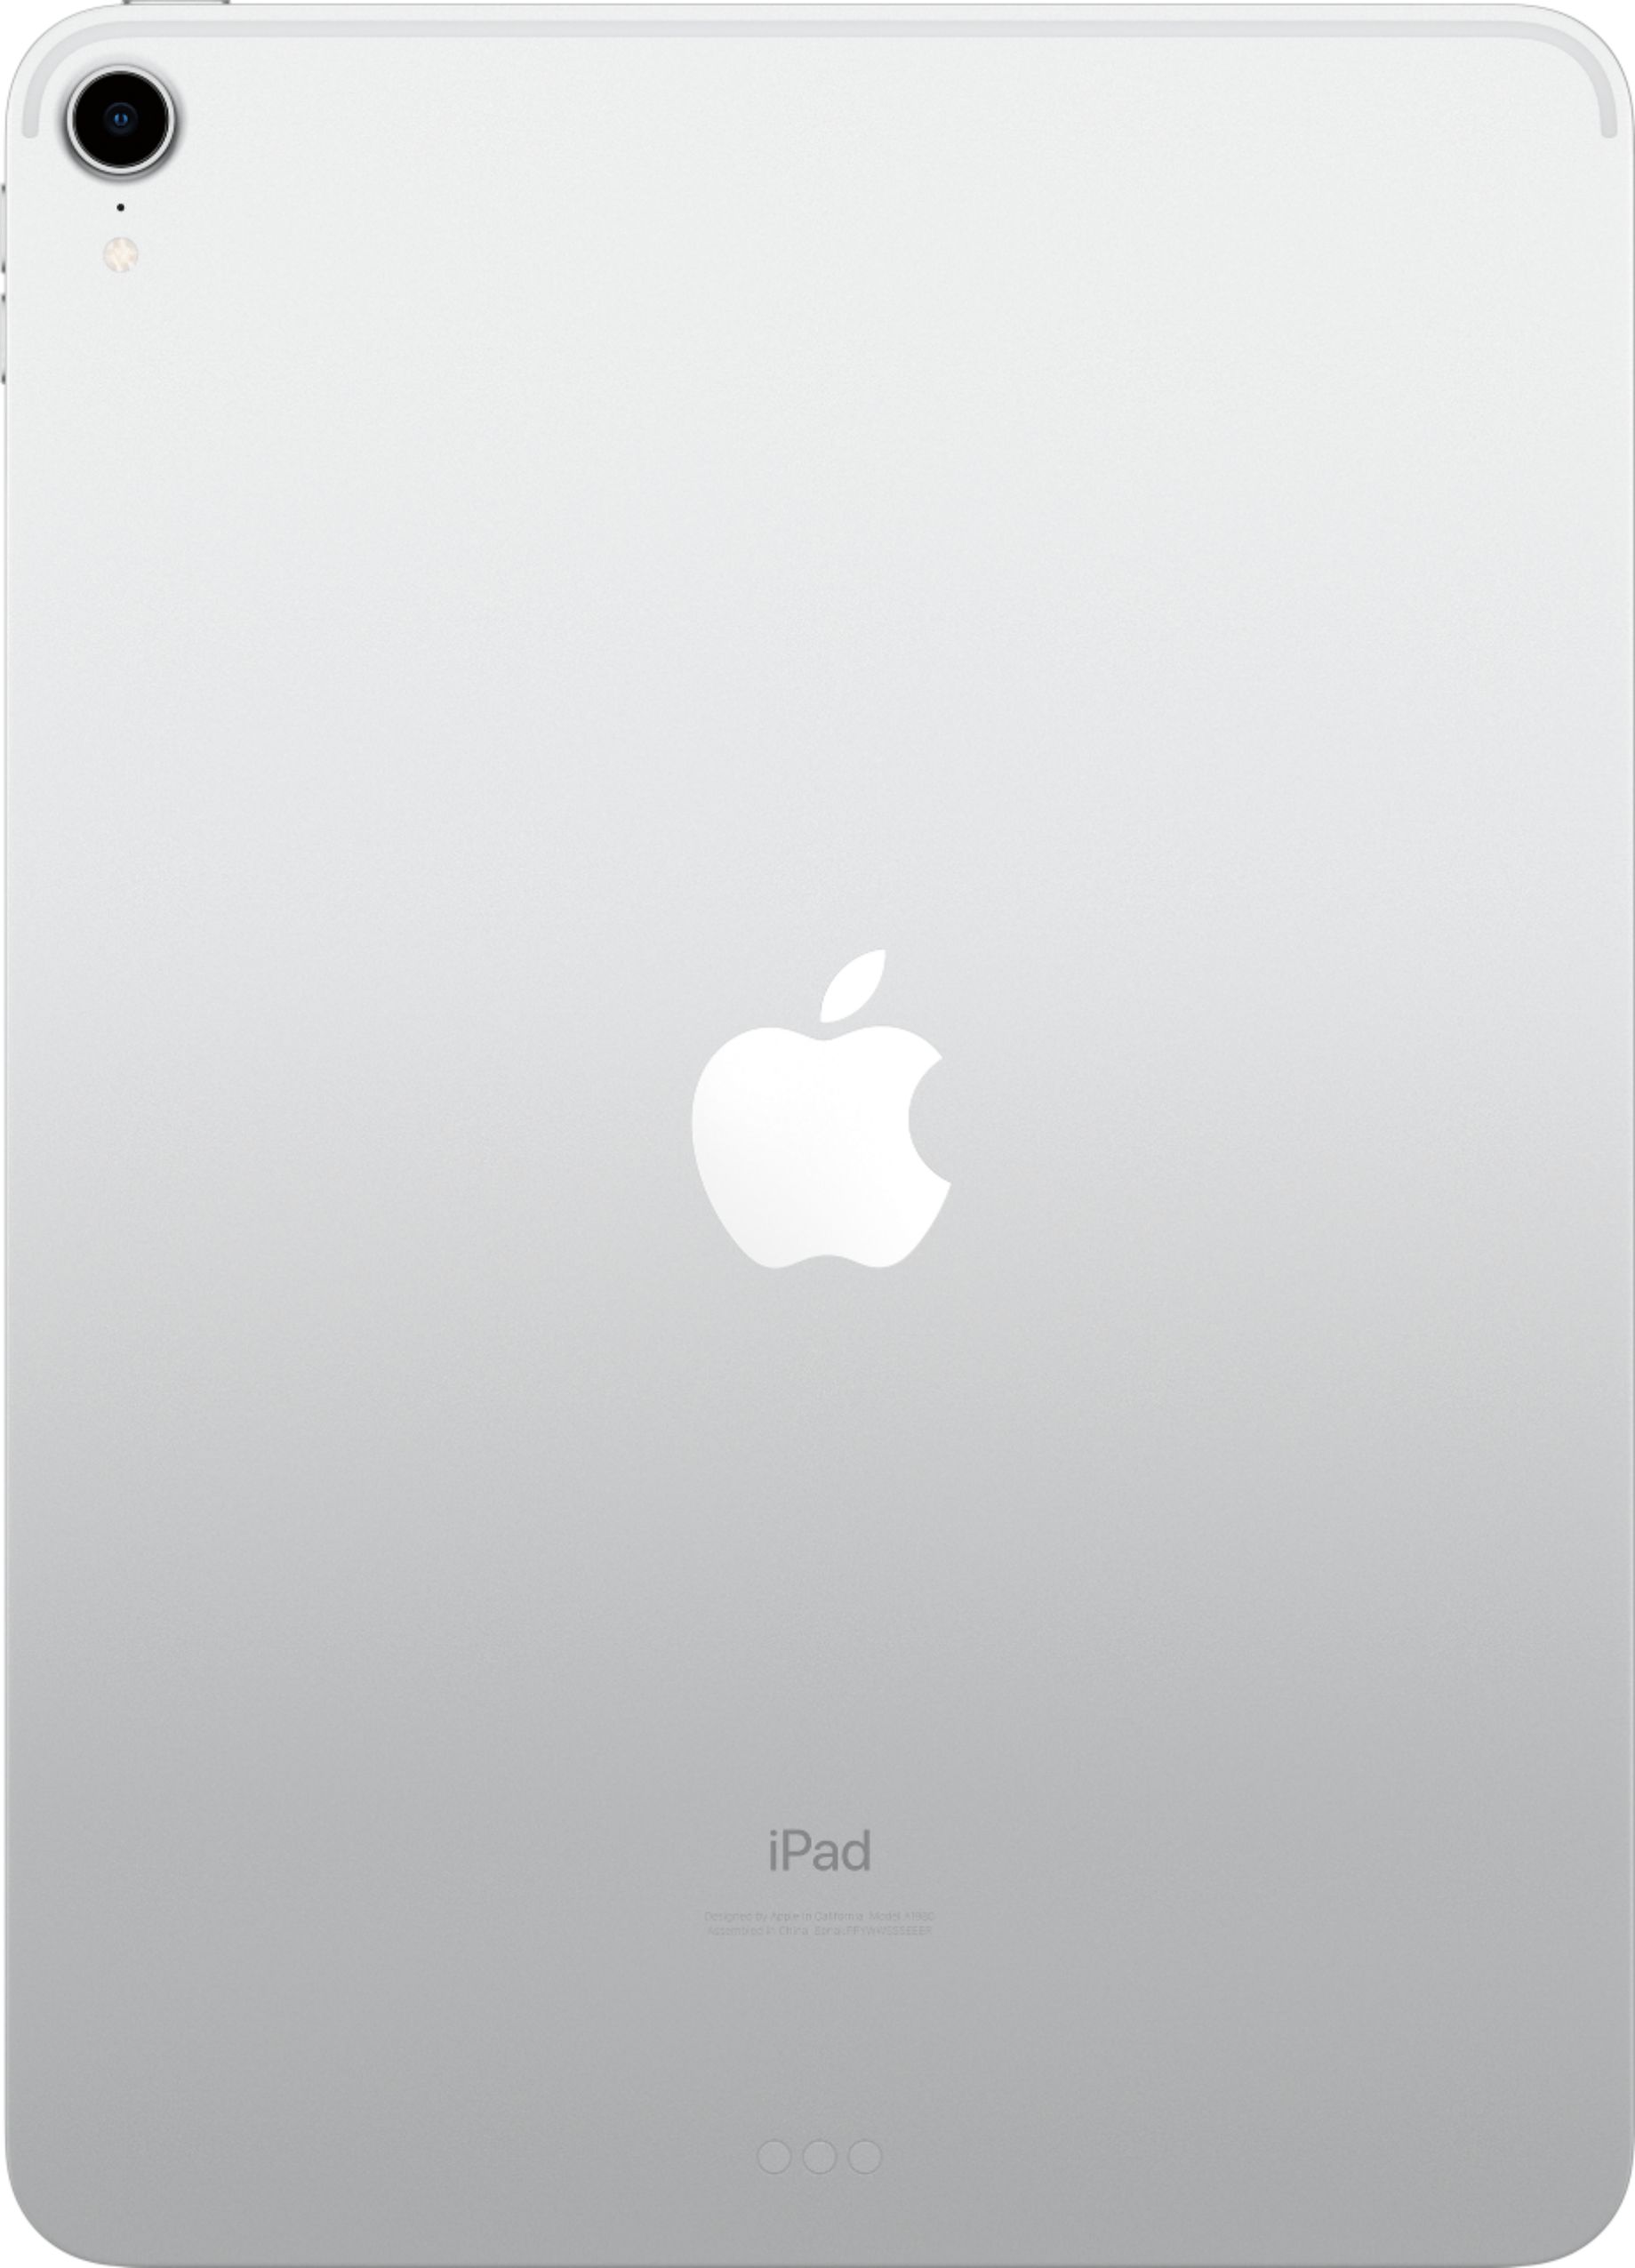 Best Buy: Apple 11-Inch iPad Pro with Wi-Fi 64GB Silver MTXP2LL/A